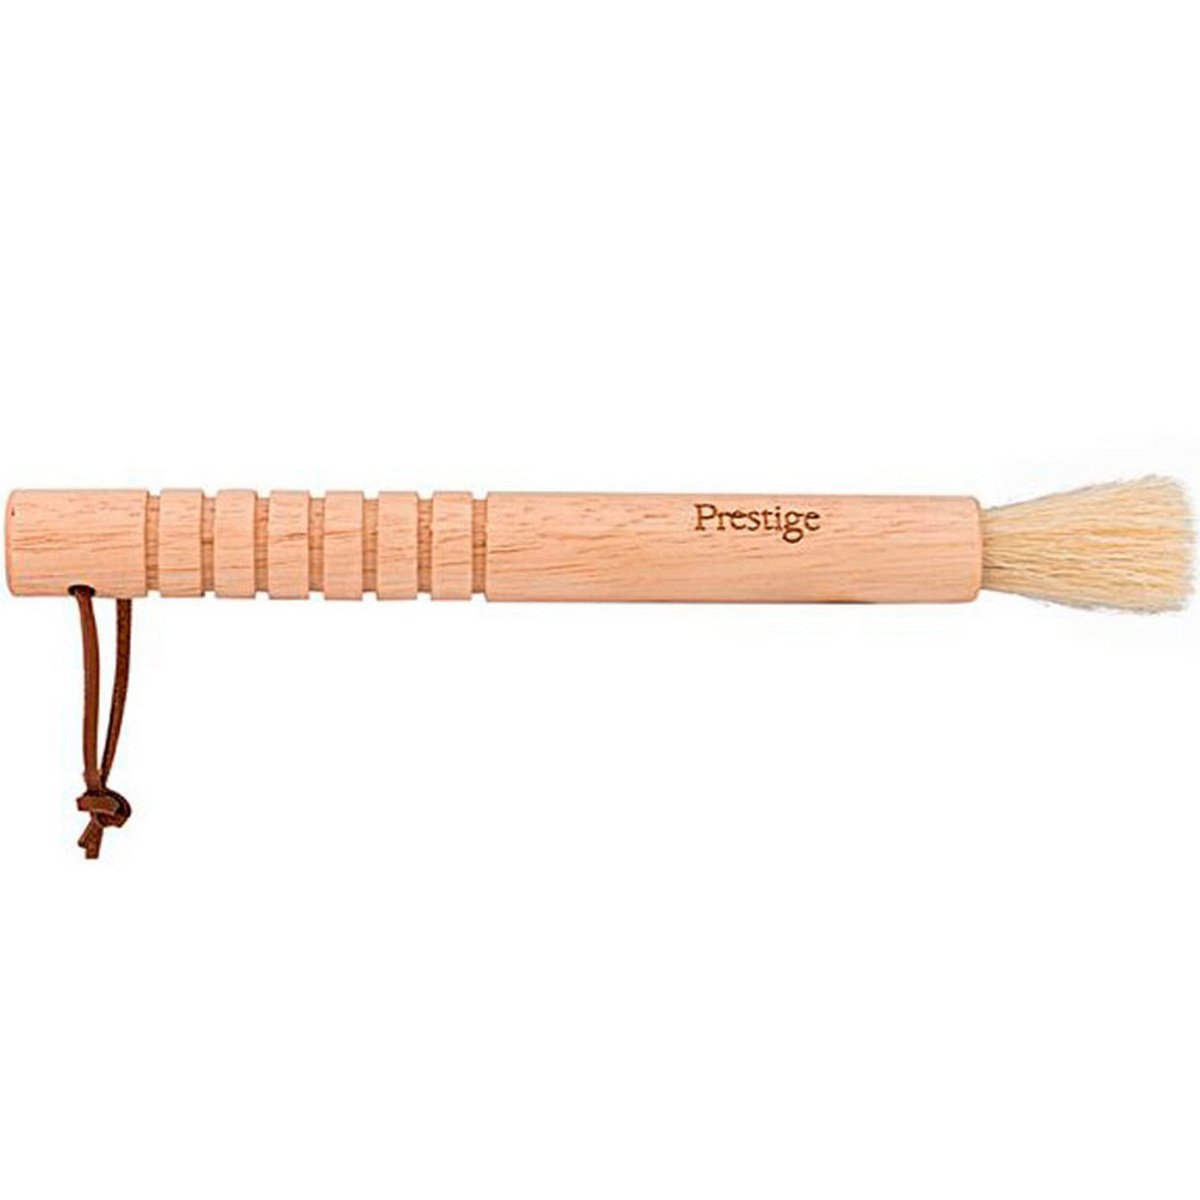 Prestige Pastry Brush Wooden 54480